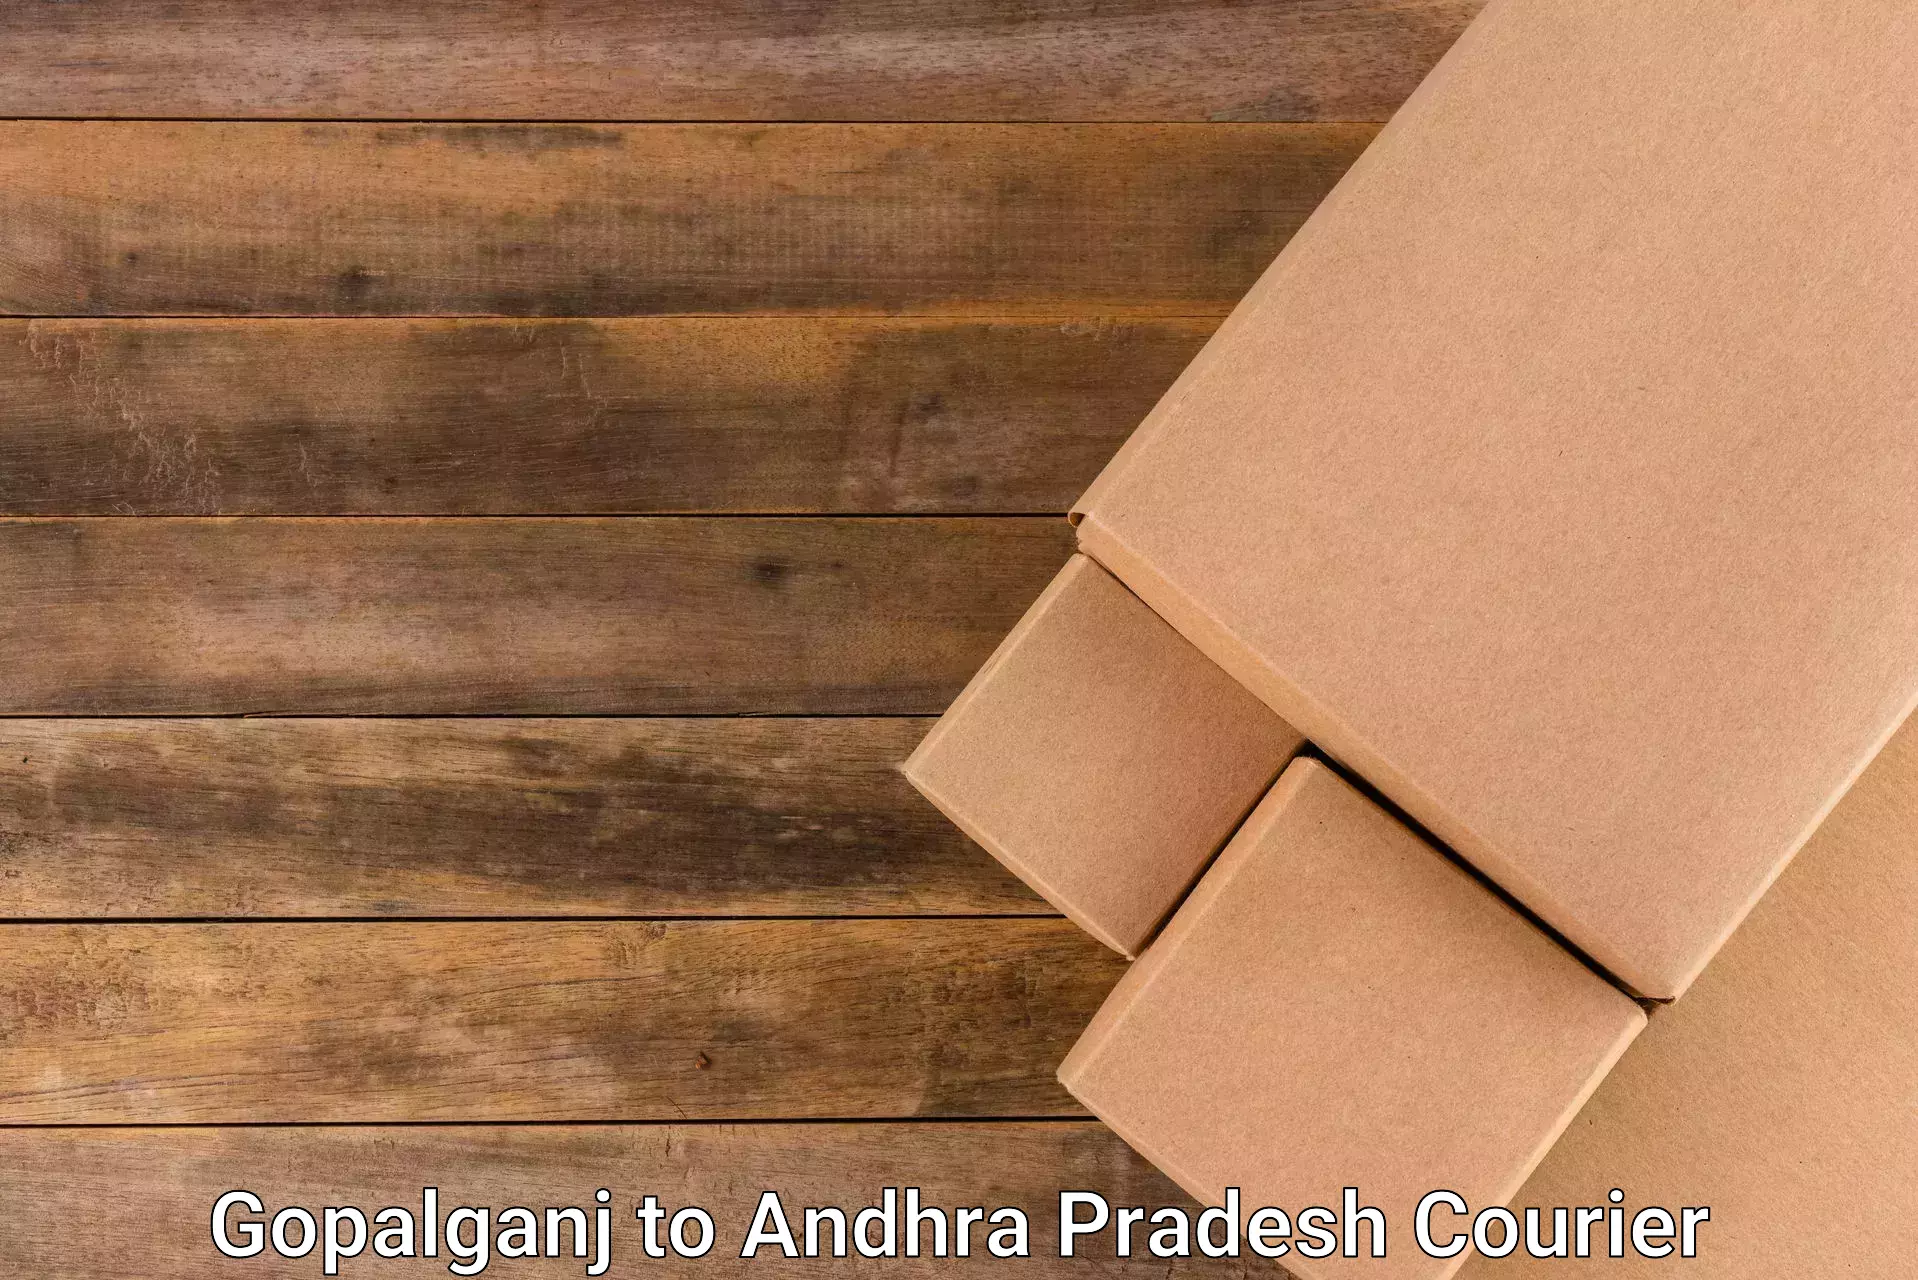 High-speed parcel service Gopalganj to Vijayawada